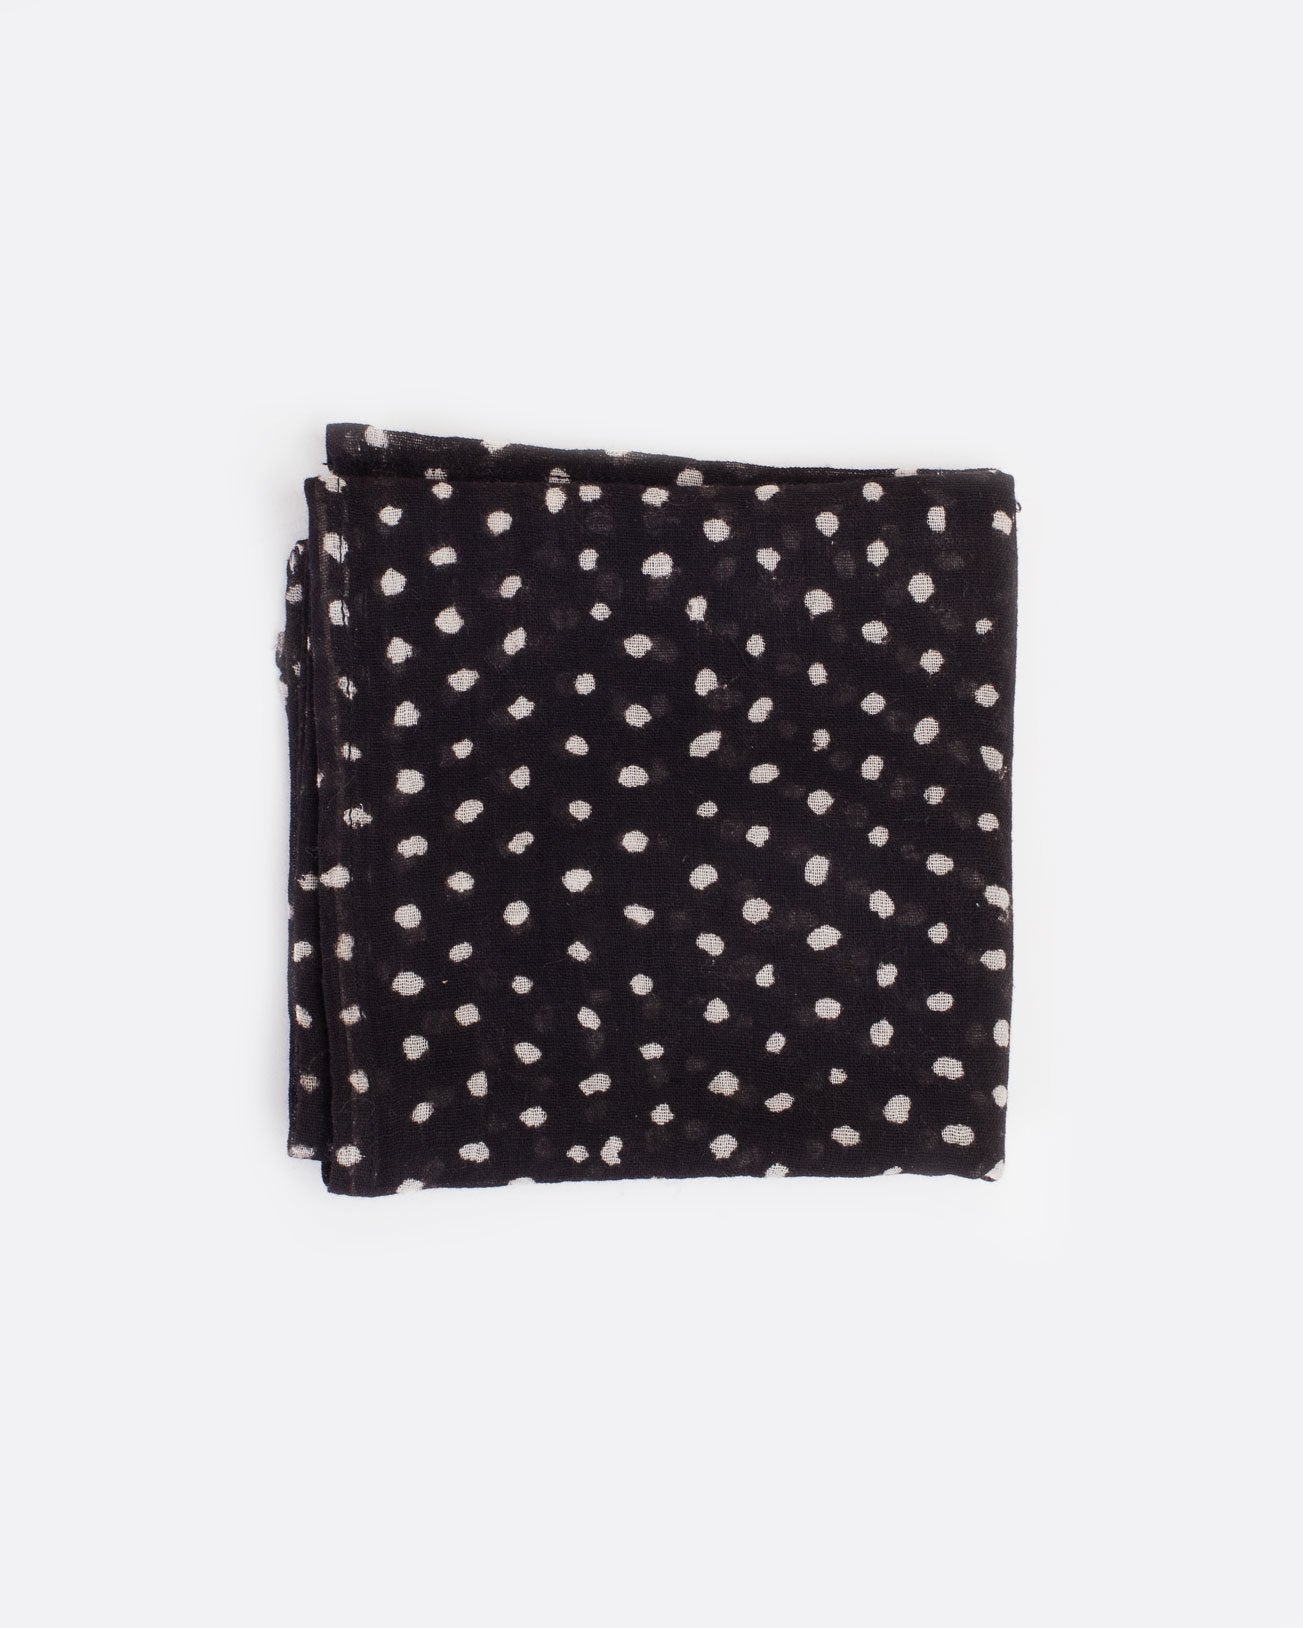 Black bandana with white polka dots, shown folded.